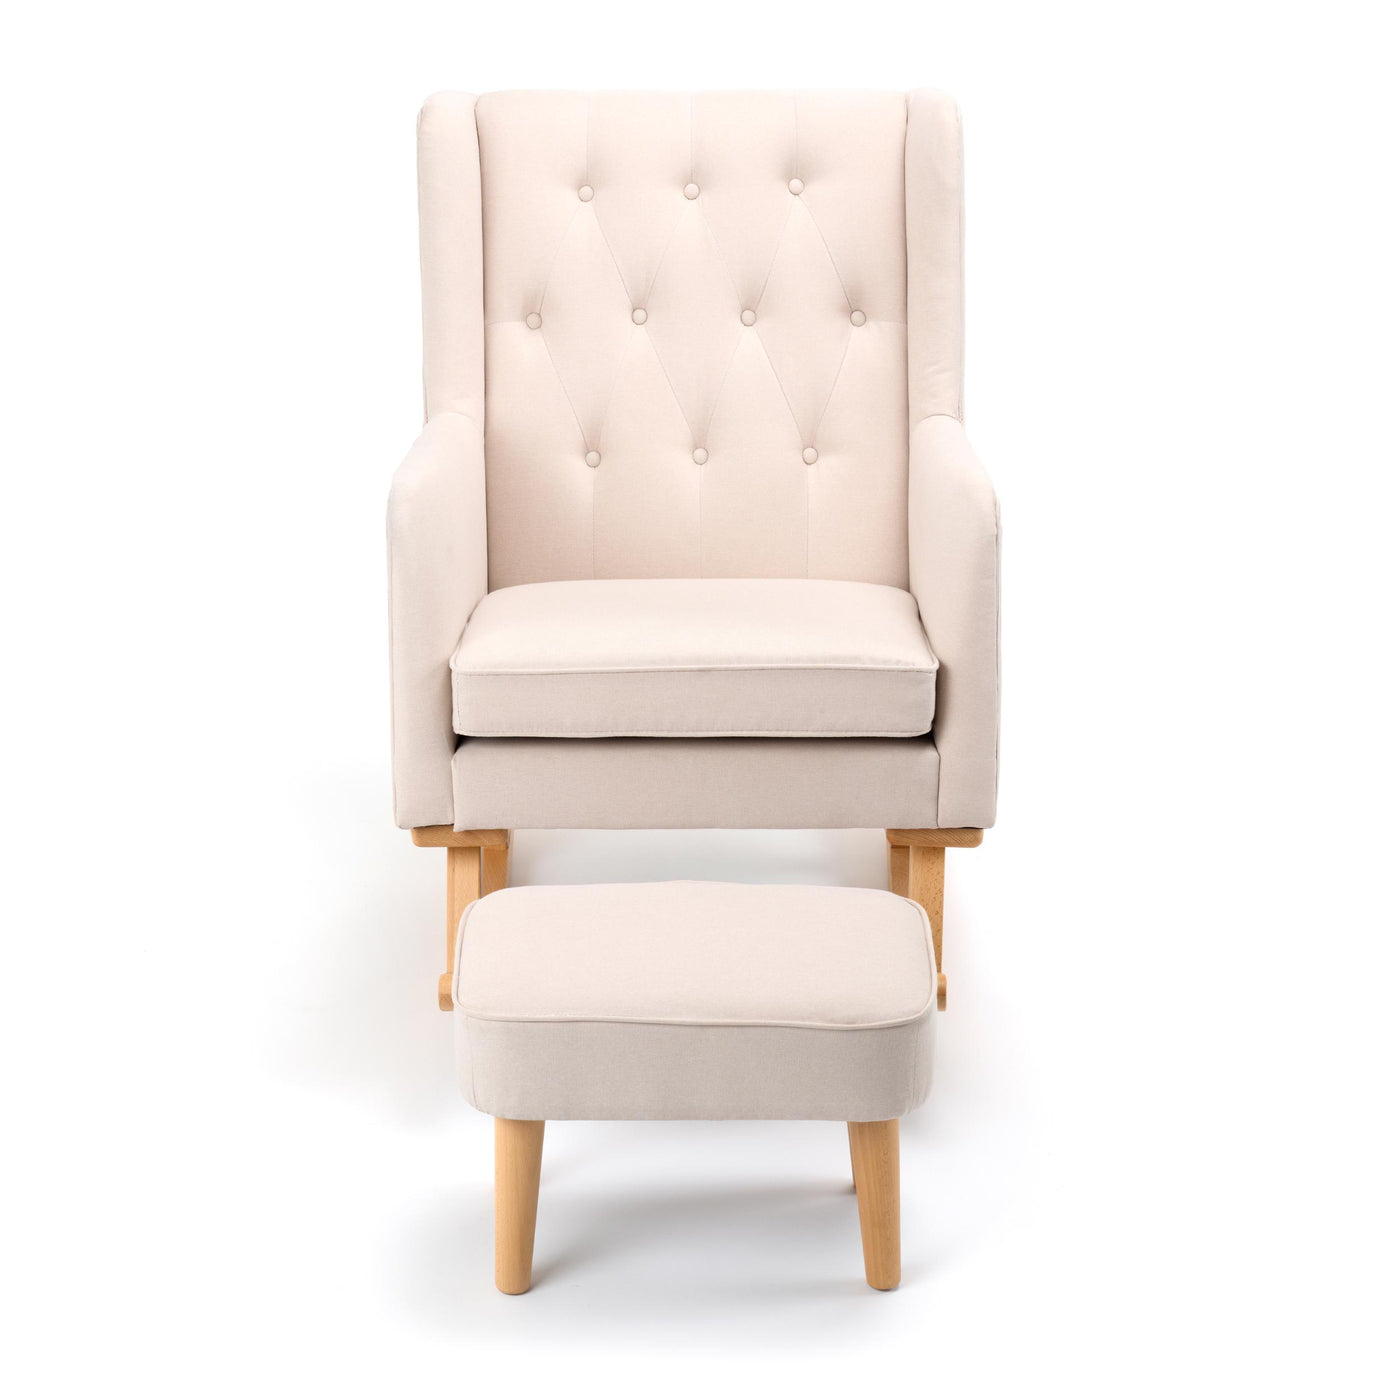 Lux Nursing Chair with Stool - Cream